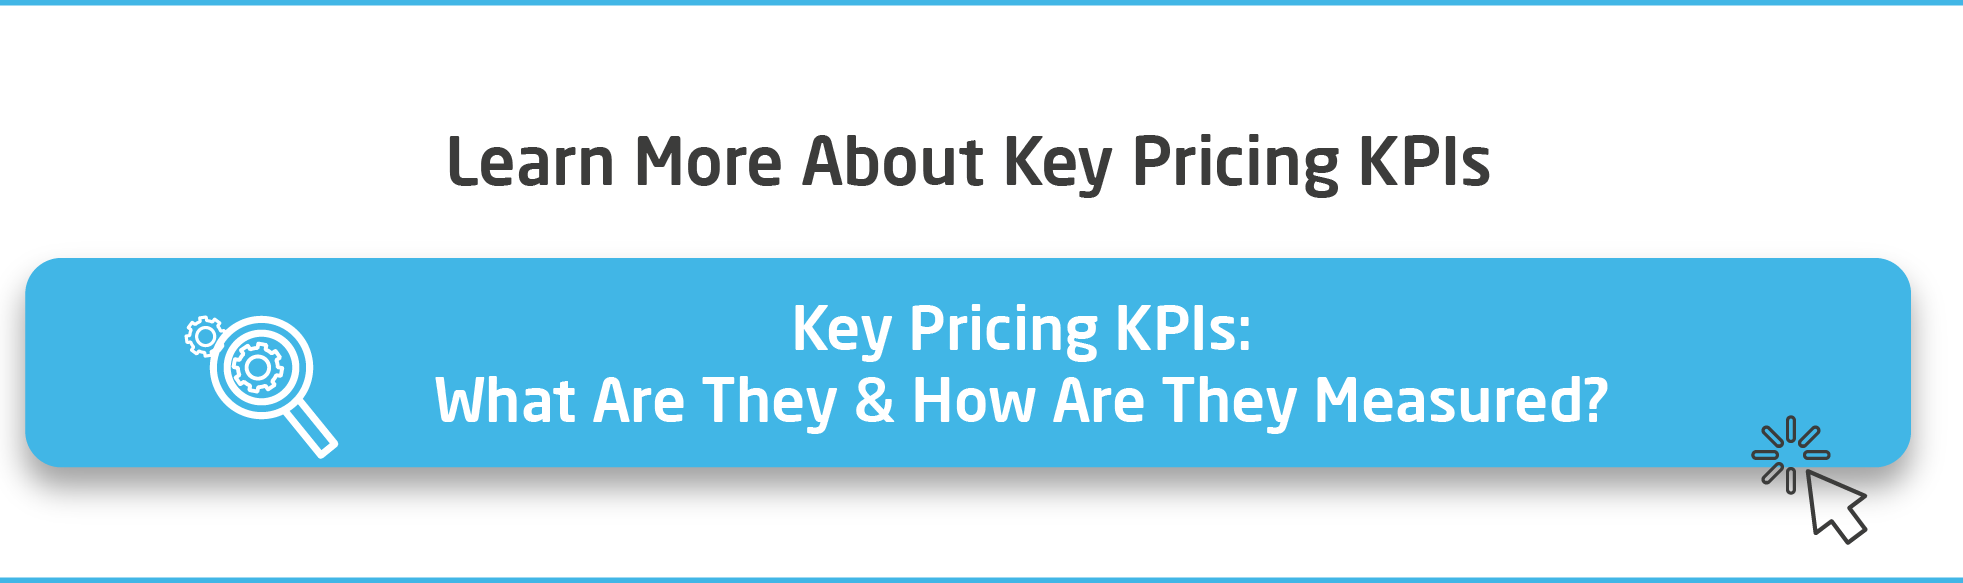 CTA-Important-Pricing-KPIs